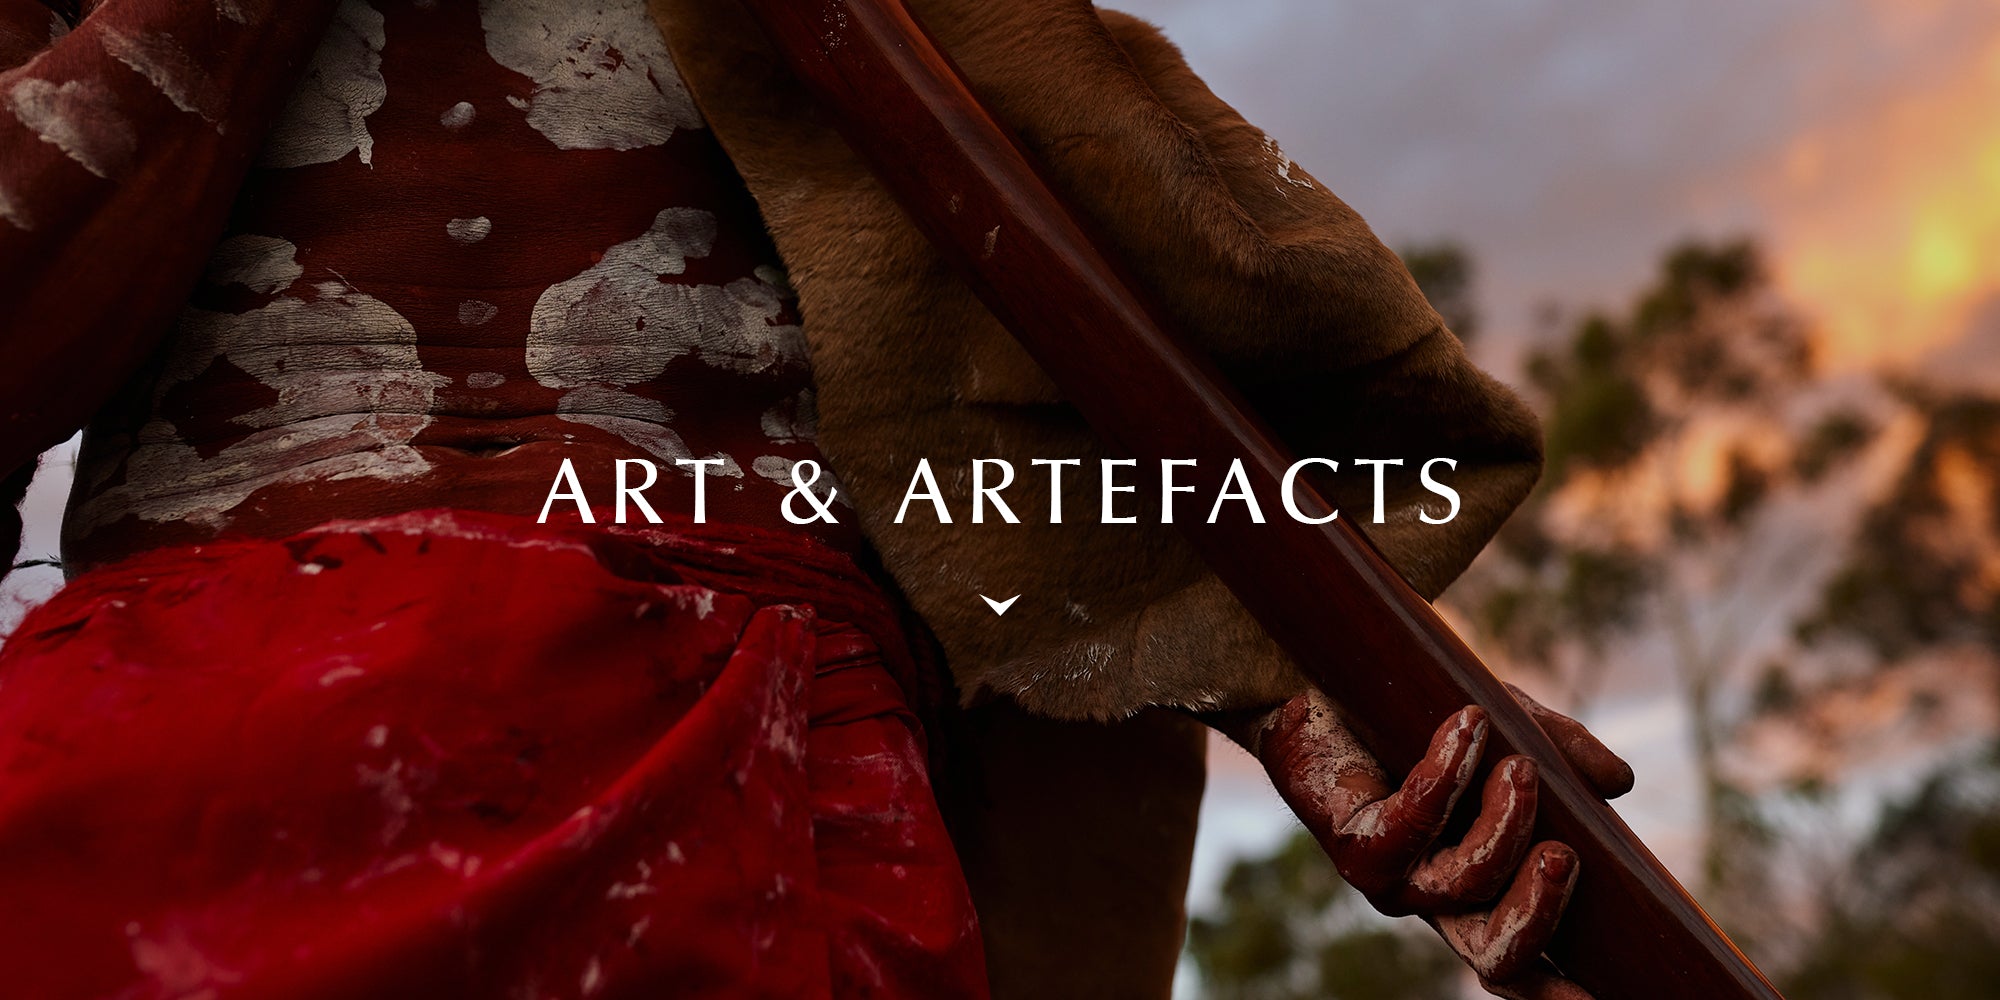 Art & Artefacts